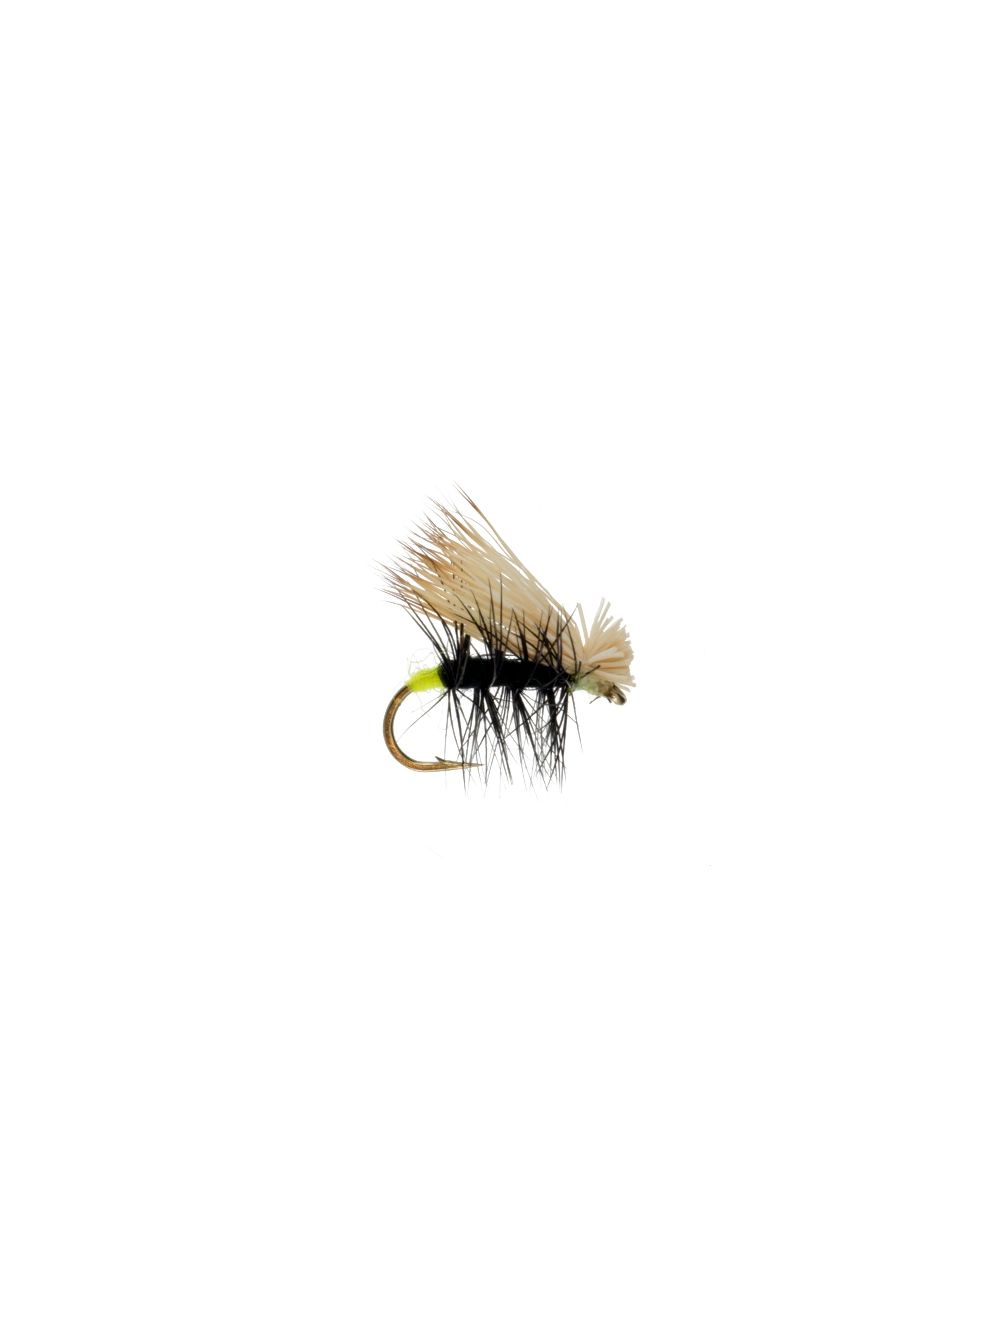 https://eadn-wc02-1020161.nxedge.io/cdn/media/catalog/product/cache/32b930e20bfef0c9badd7ee253a86131/g/r/grannom-fly-fishing-flies-dry-flies_1.jpg